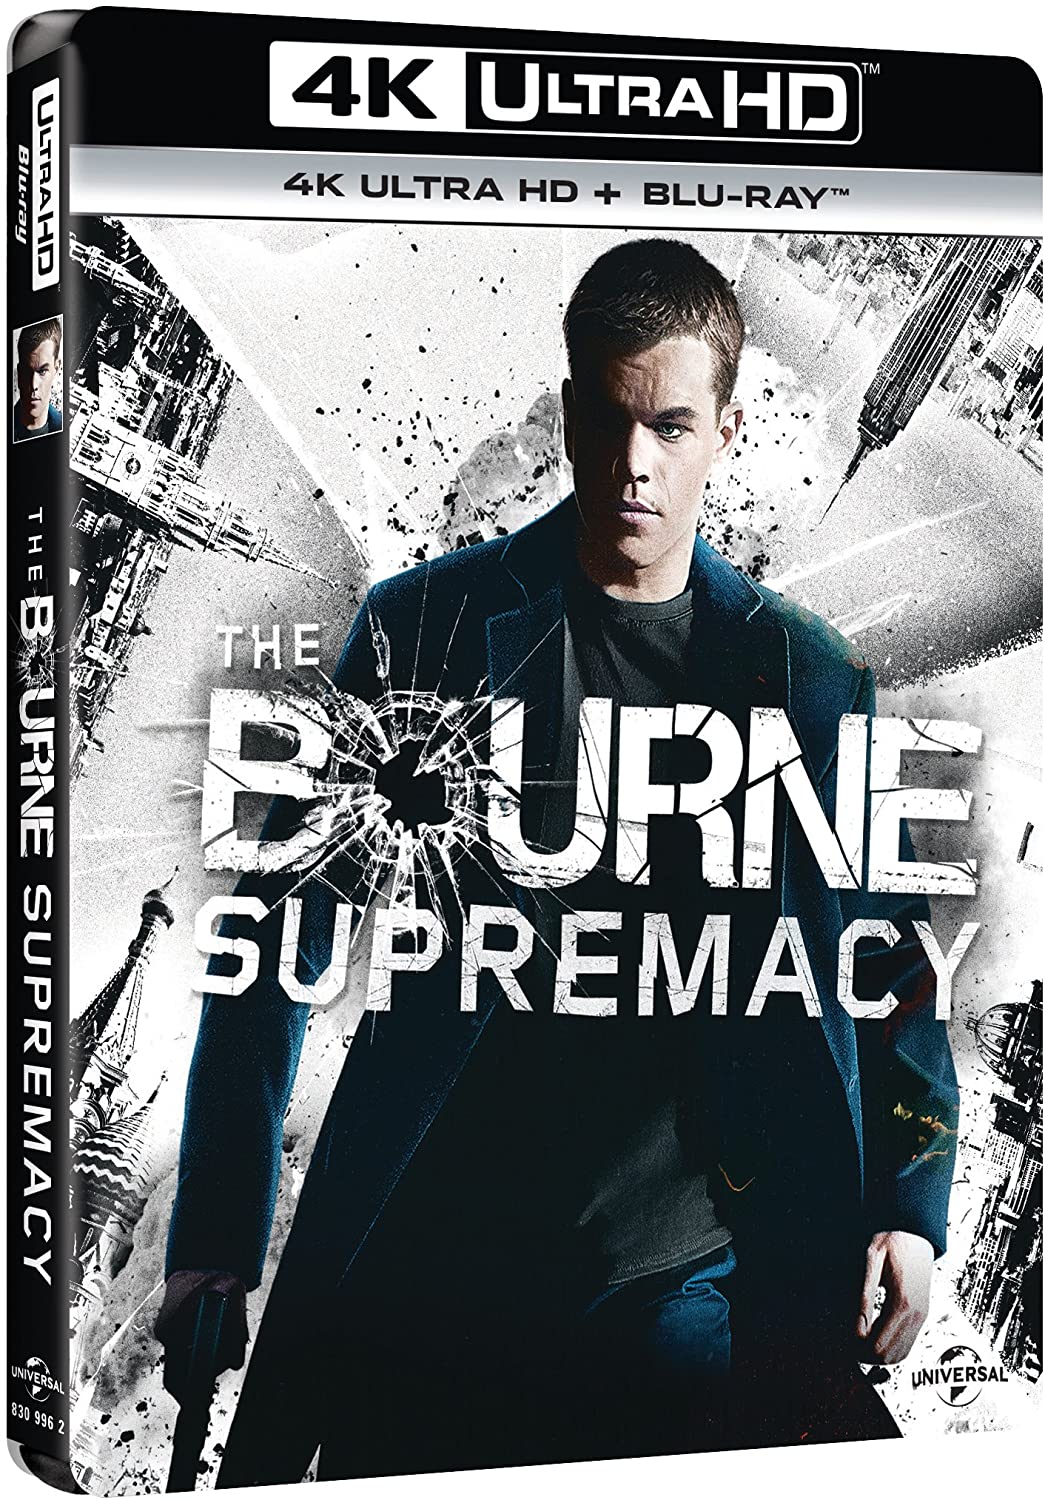 Stiahni si UHD Filmy Bournuv mytus / The Bourne Supremacy (2016)(CZ/EN)[2160p][HEVC][4K HDR 10bit] = CSFD 86%